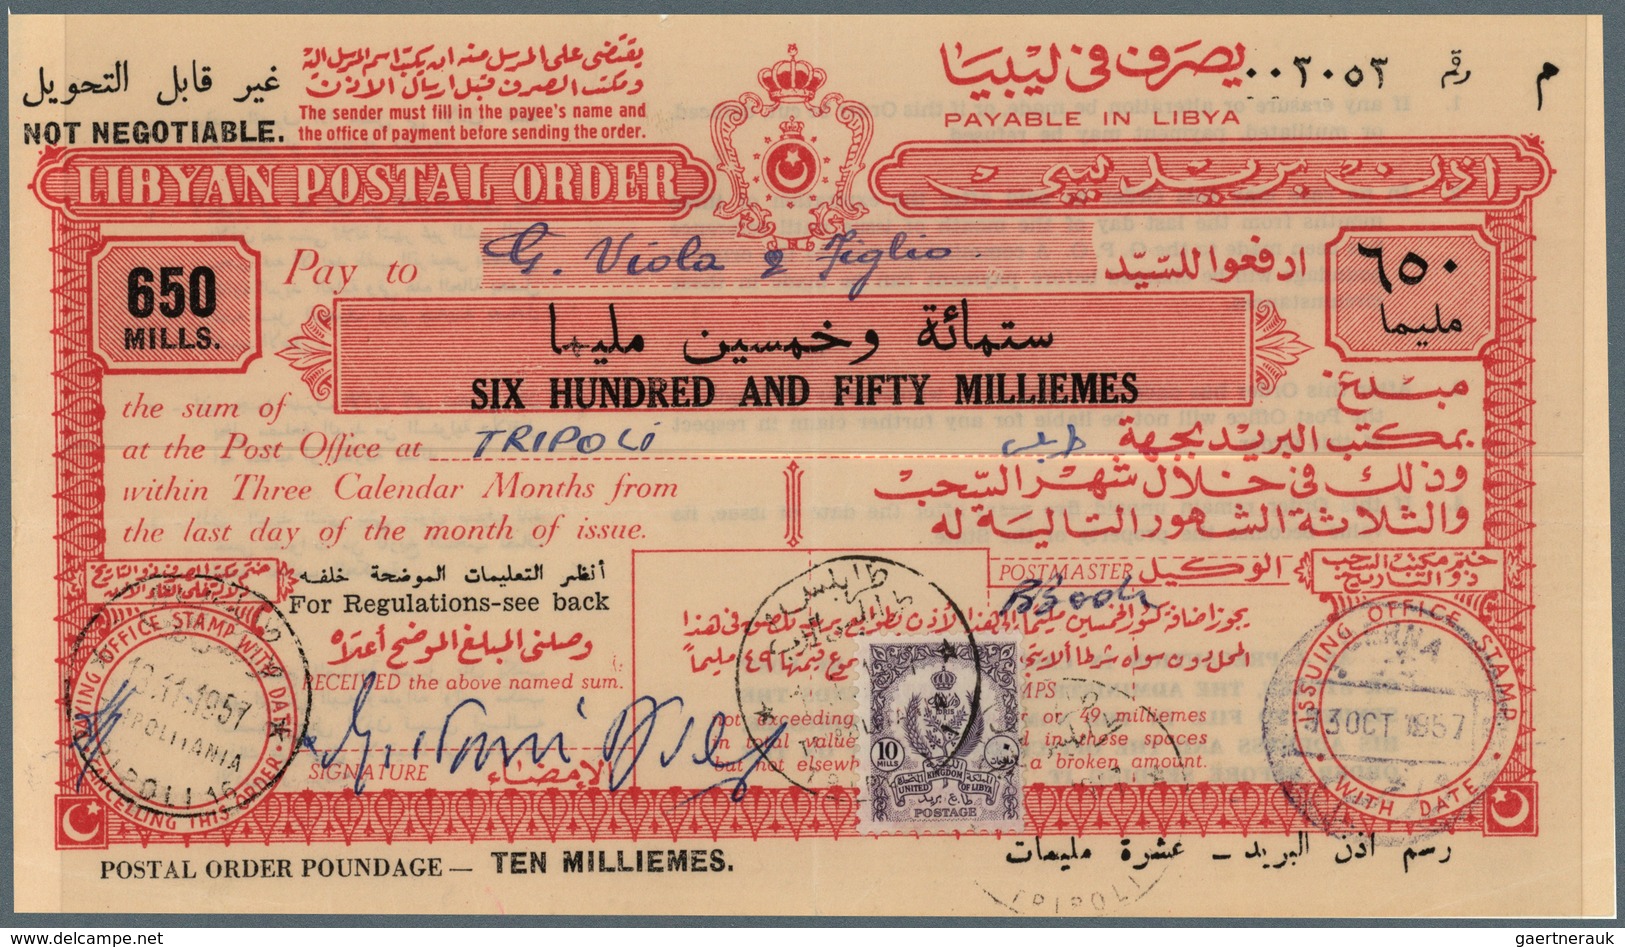 23496 Libyen: 1957 - 1959, wonderful lot of Libyan postal stationerys - Postal Orders - from 100 milliemès